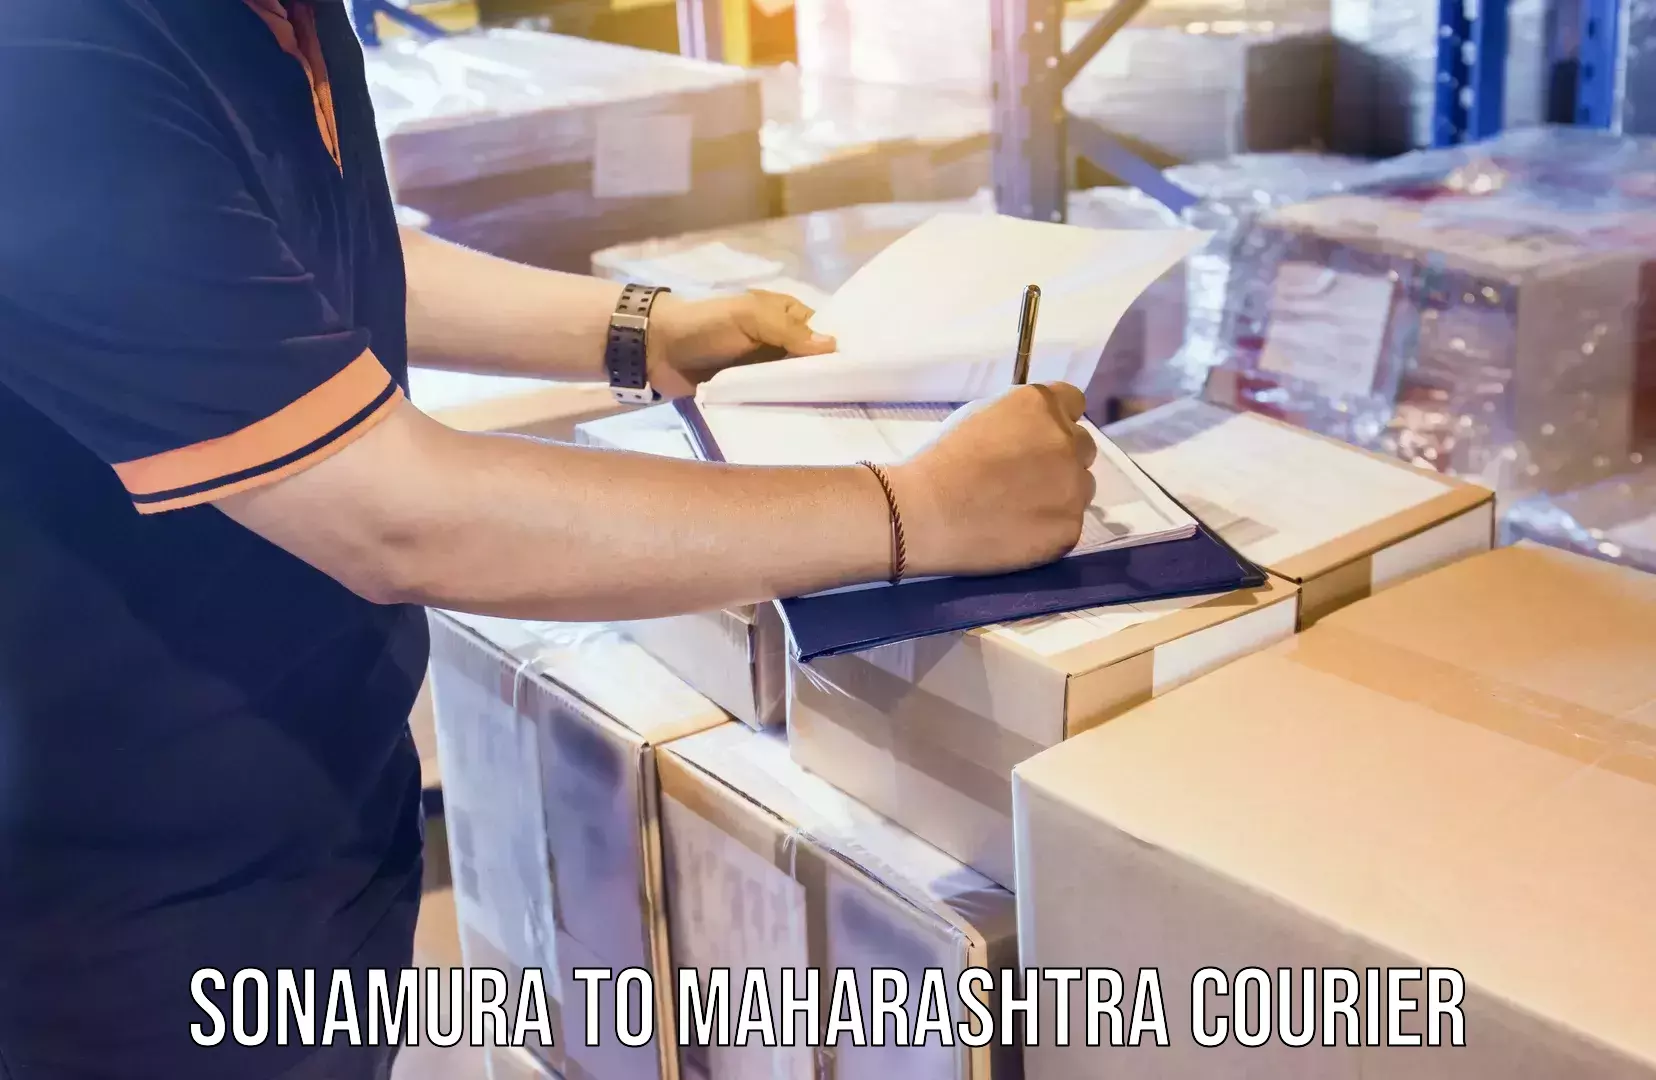 Global logistics network Sonamura to Maharashtra